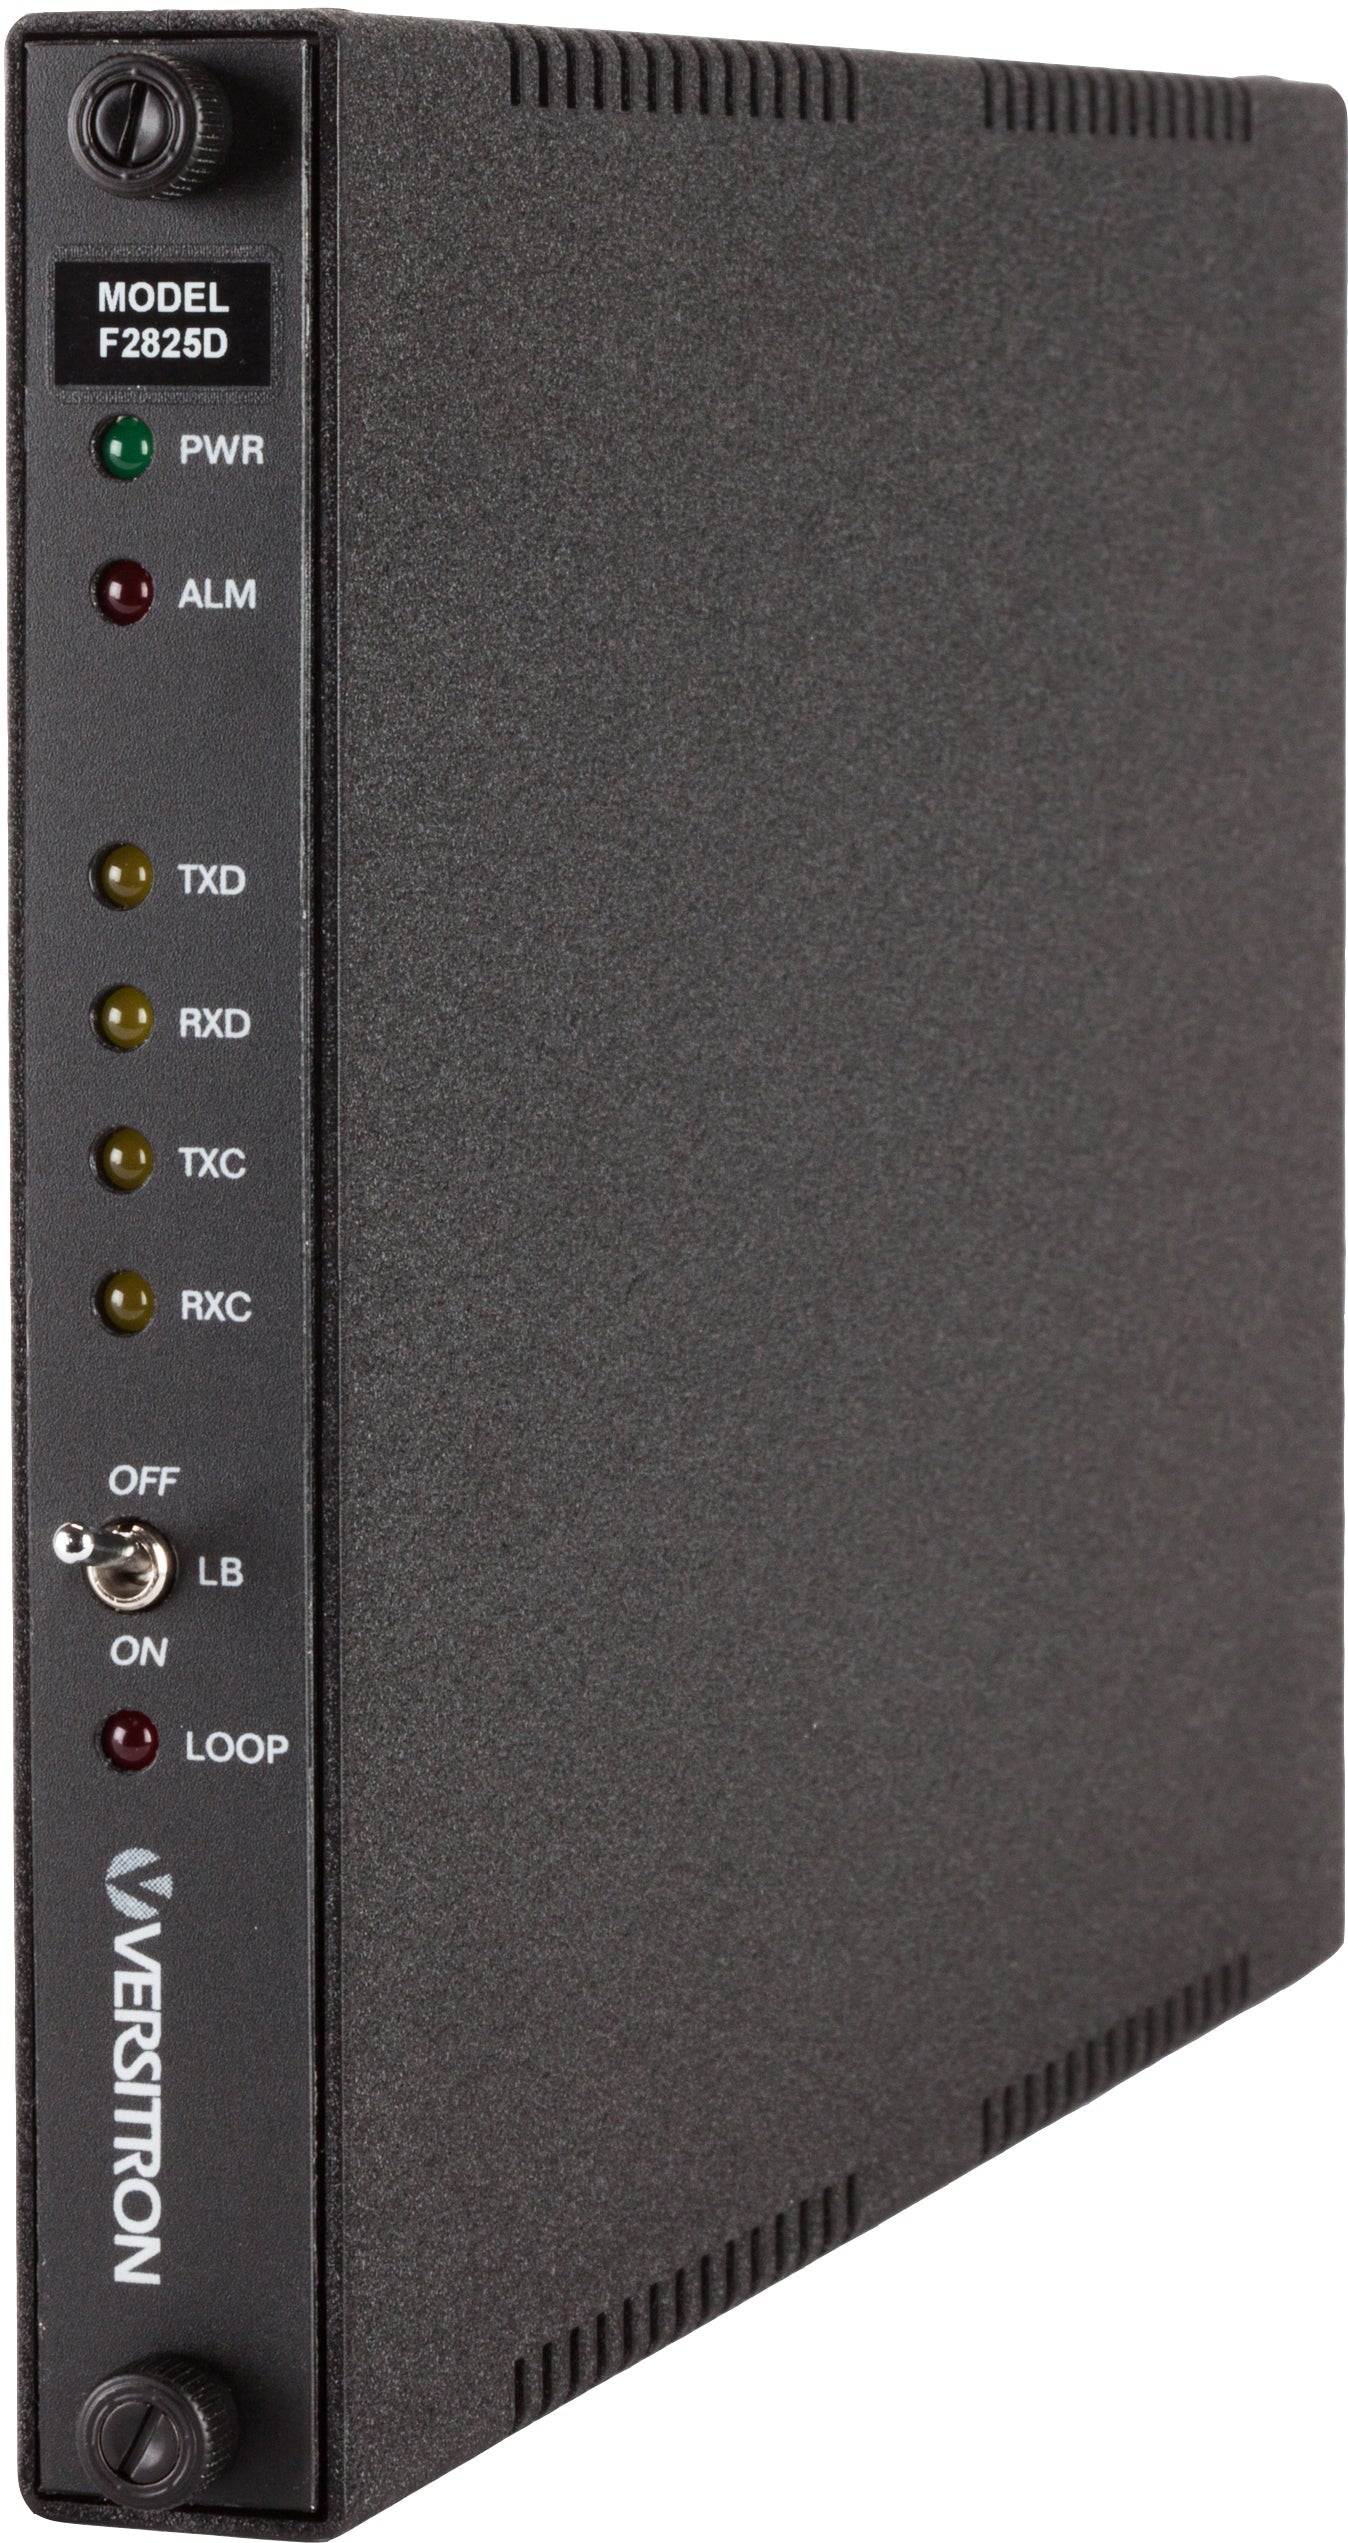 RS-530 Circuit Card Serial Data to Fiber Converter